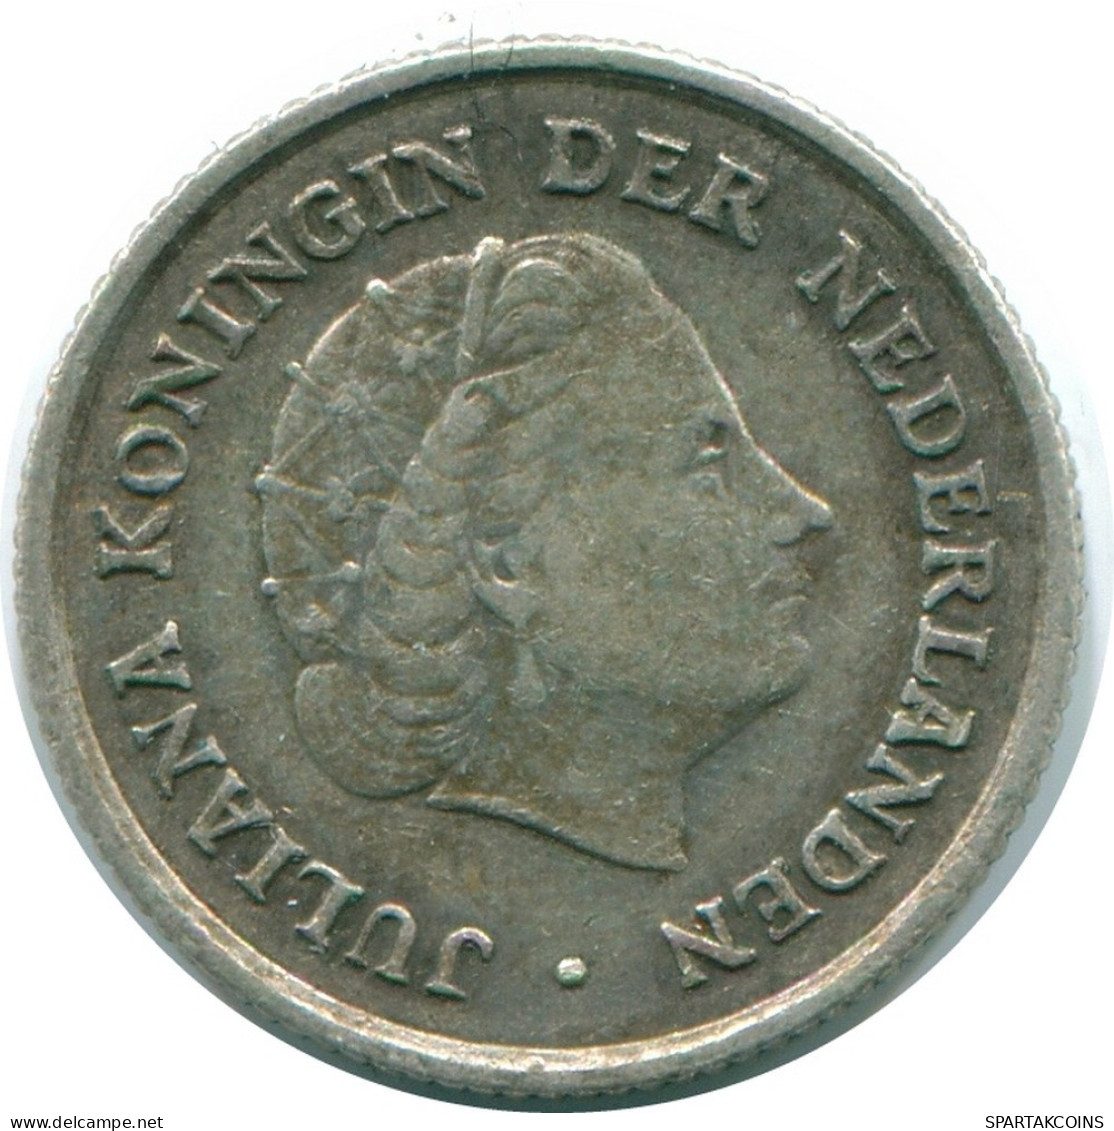 1/10 GULDEN 1963 NIEDERLÄNDISCHE ANTILLEN SILBER Koloniale Münze #NL12636.3.D.A - Netherlands Antilles